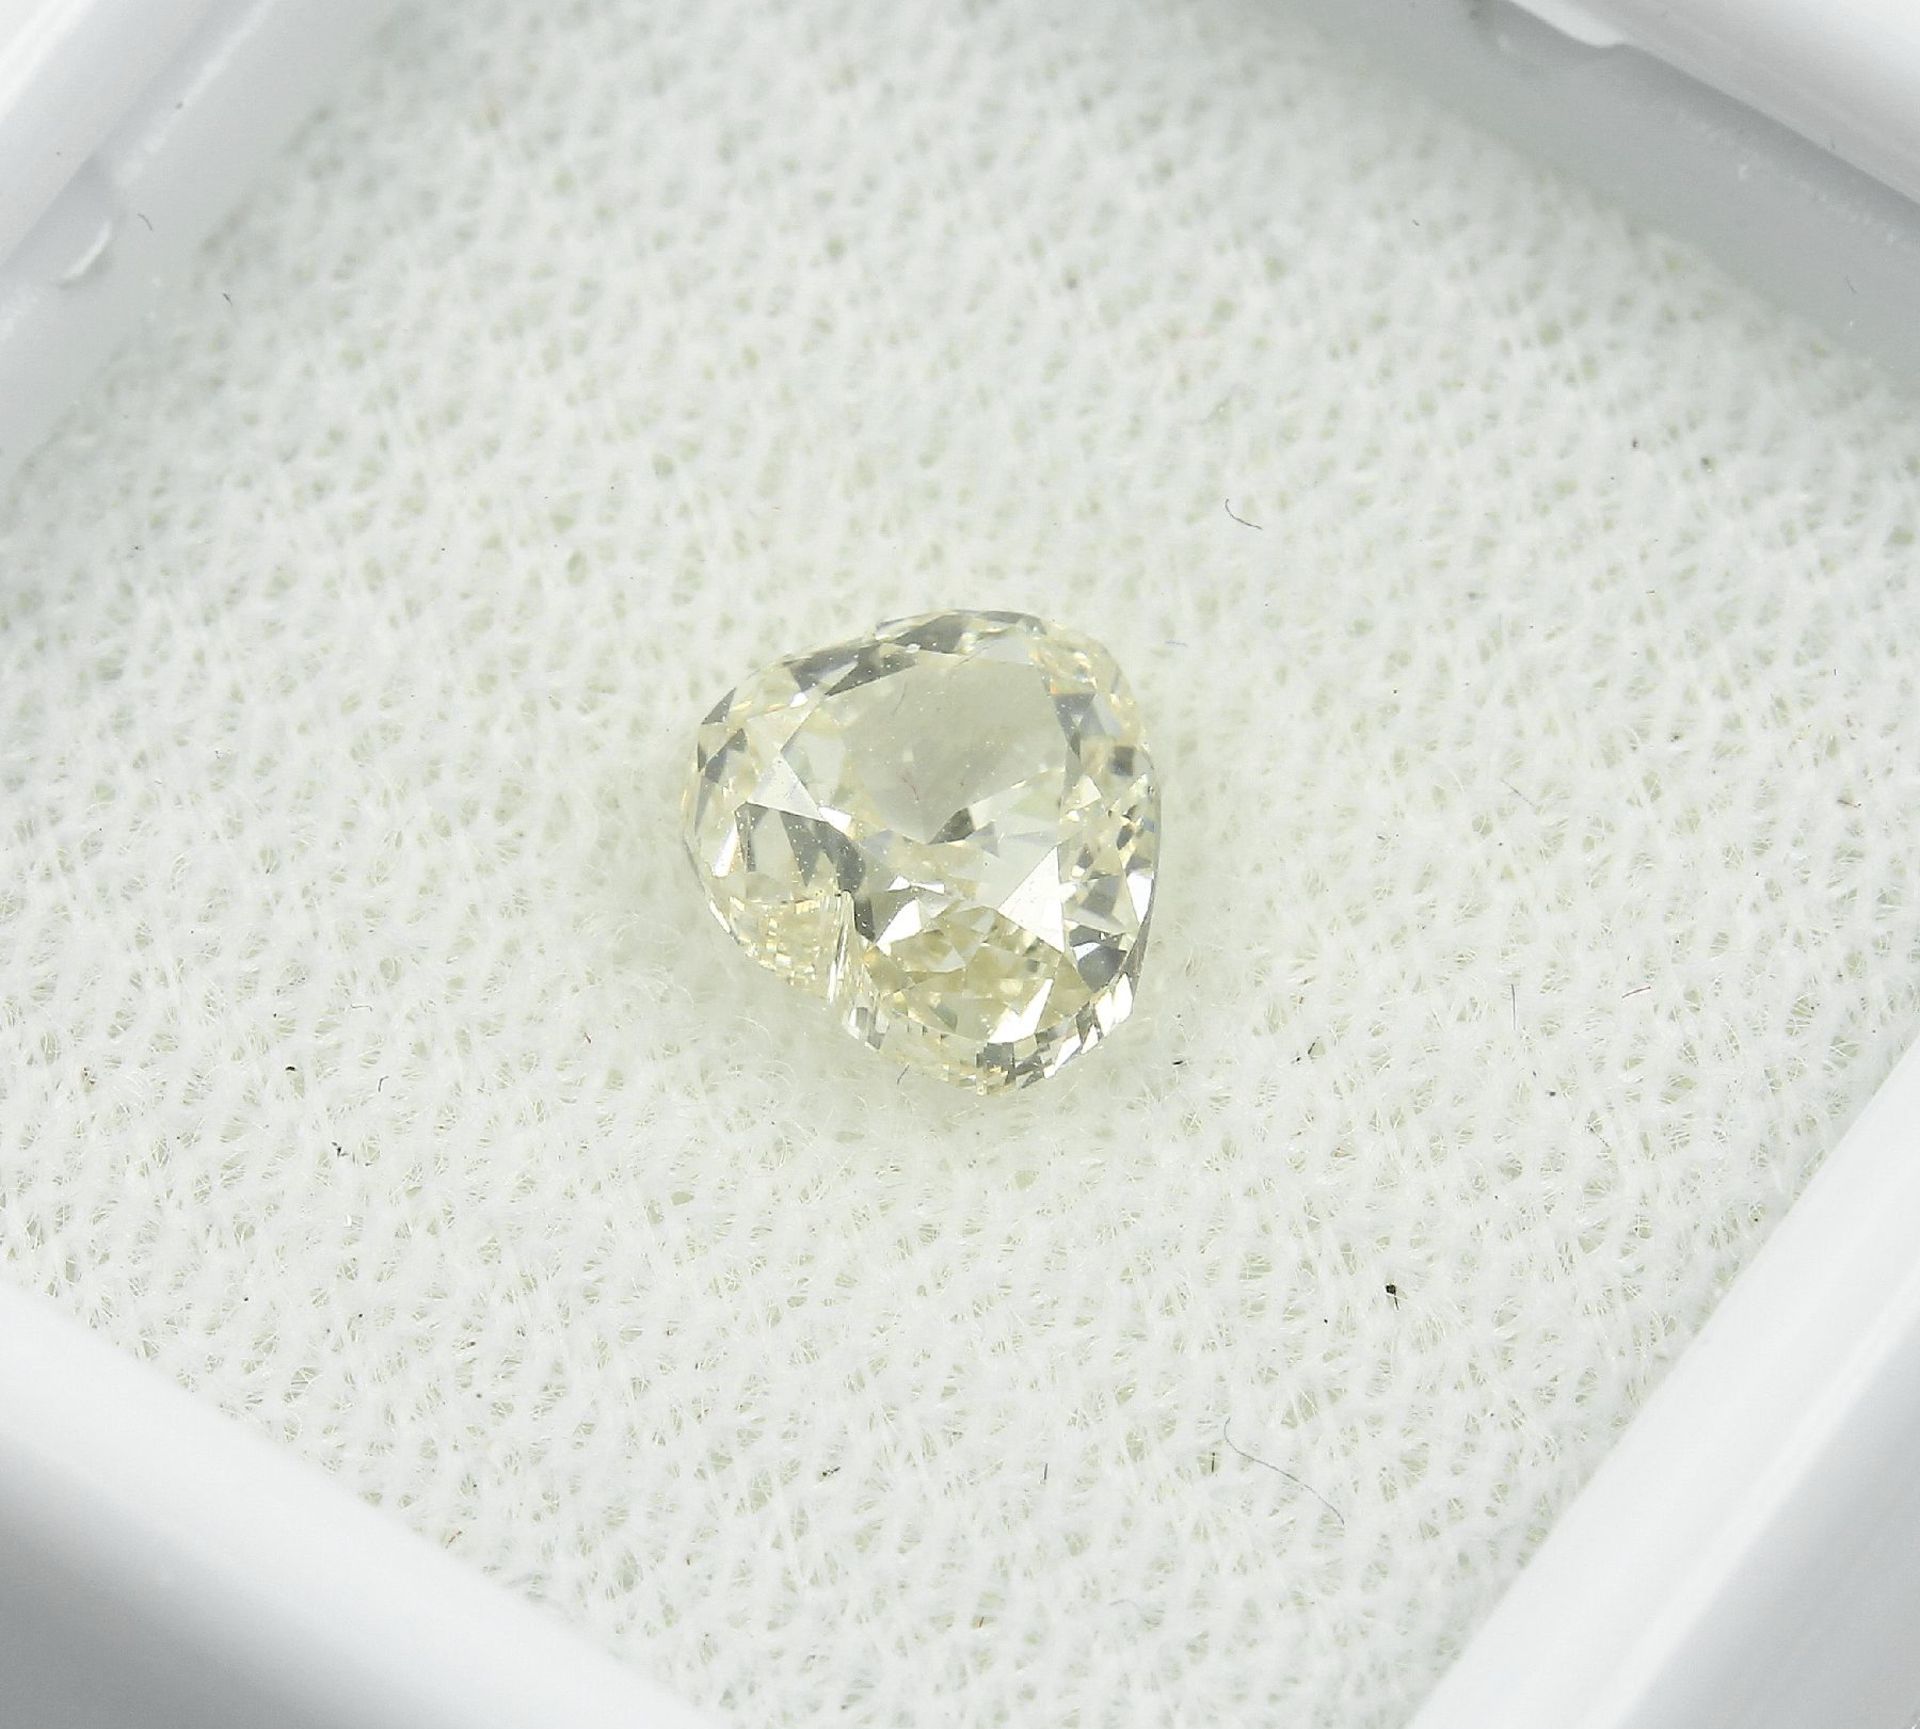 Loser Diamant, 0.99 ct Natural fancy yellow/vvs2, mit HRD-Expertise Schätzpreis: 2310, - EURLoose - Bild 3 aus 4